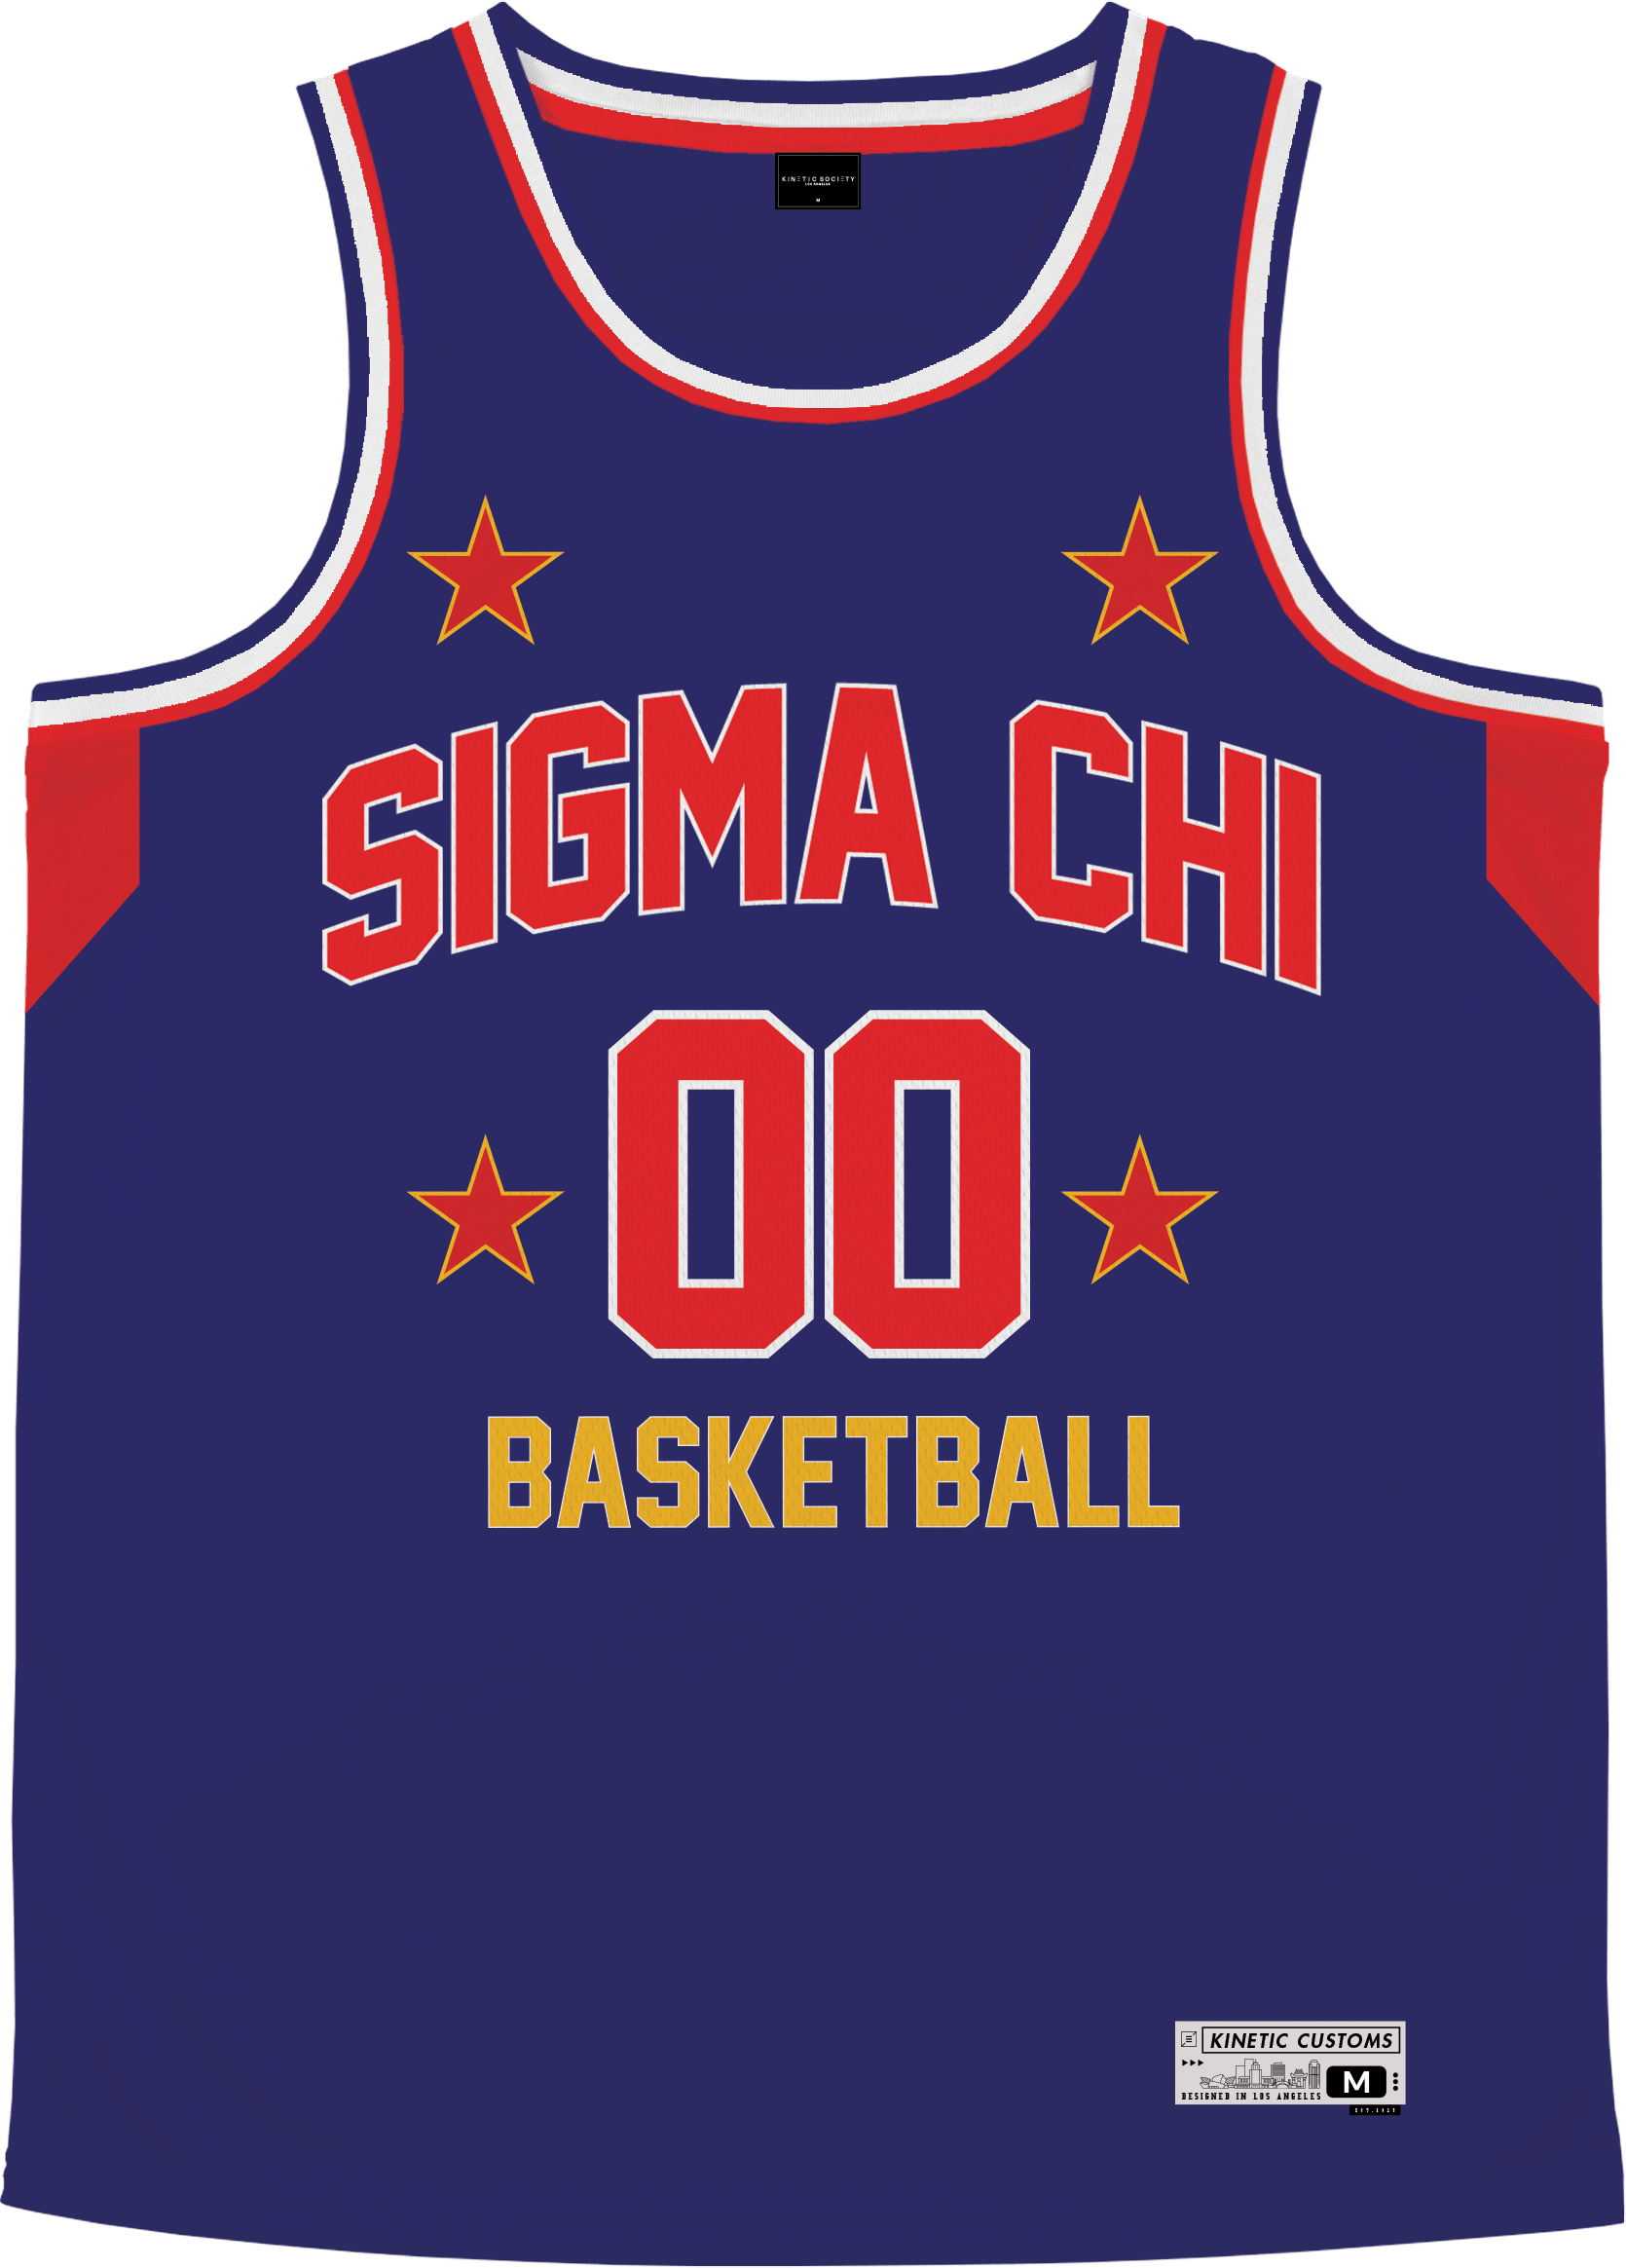 Sigma Chi - Retro Ballers Basketball Jersey - Kinetic Society